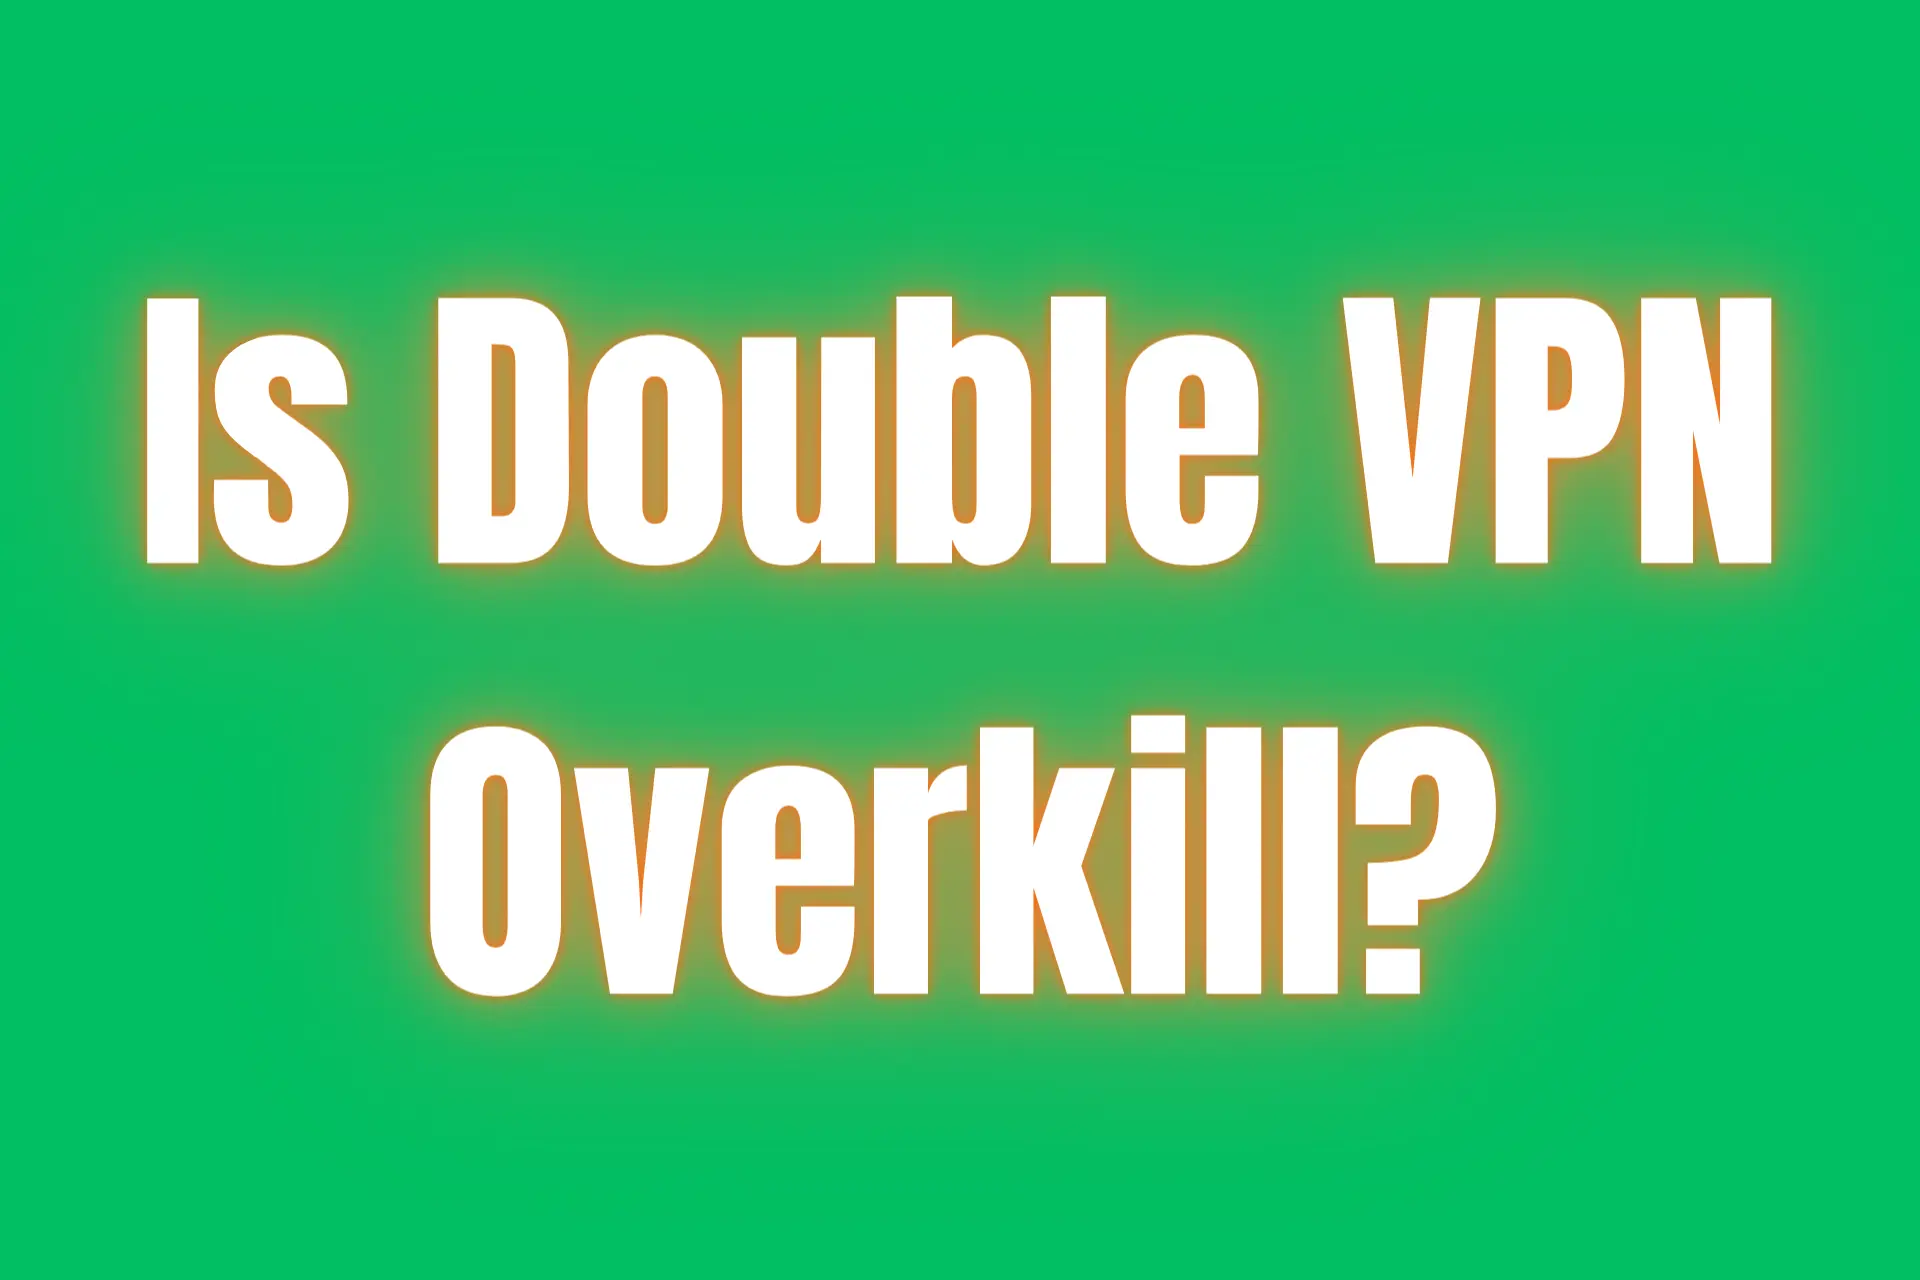 Is double VPN overkill?